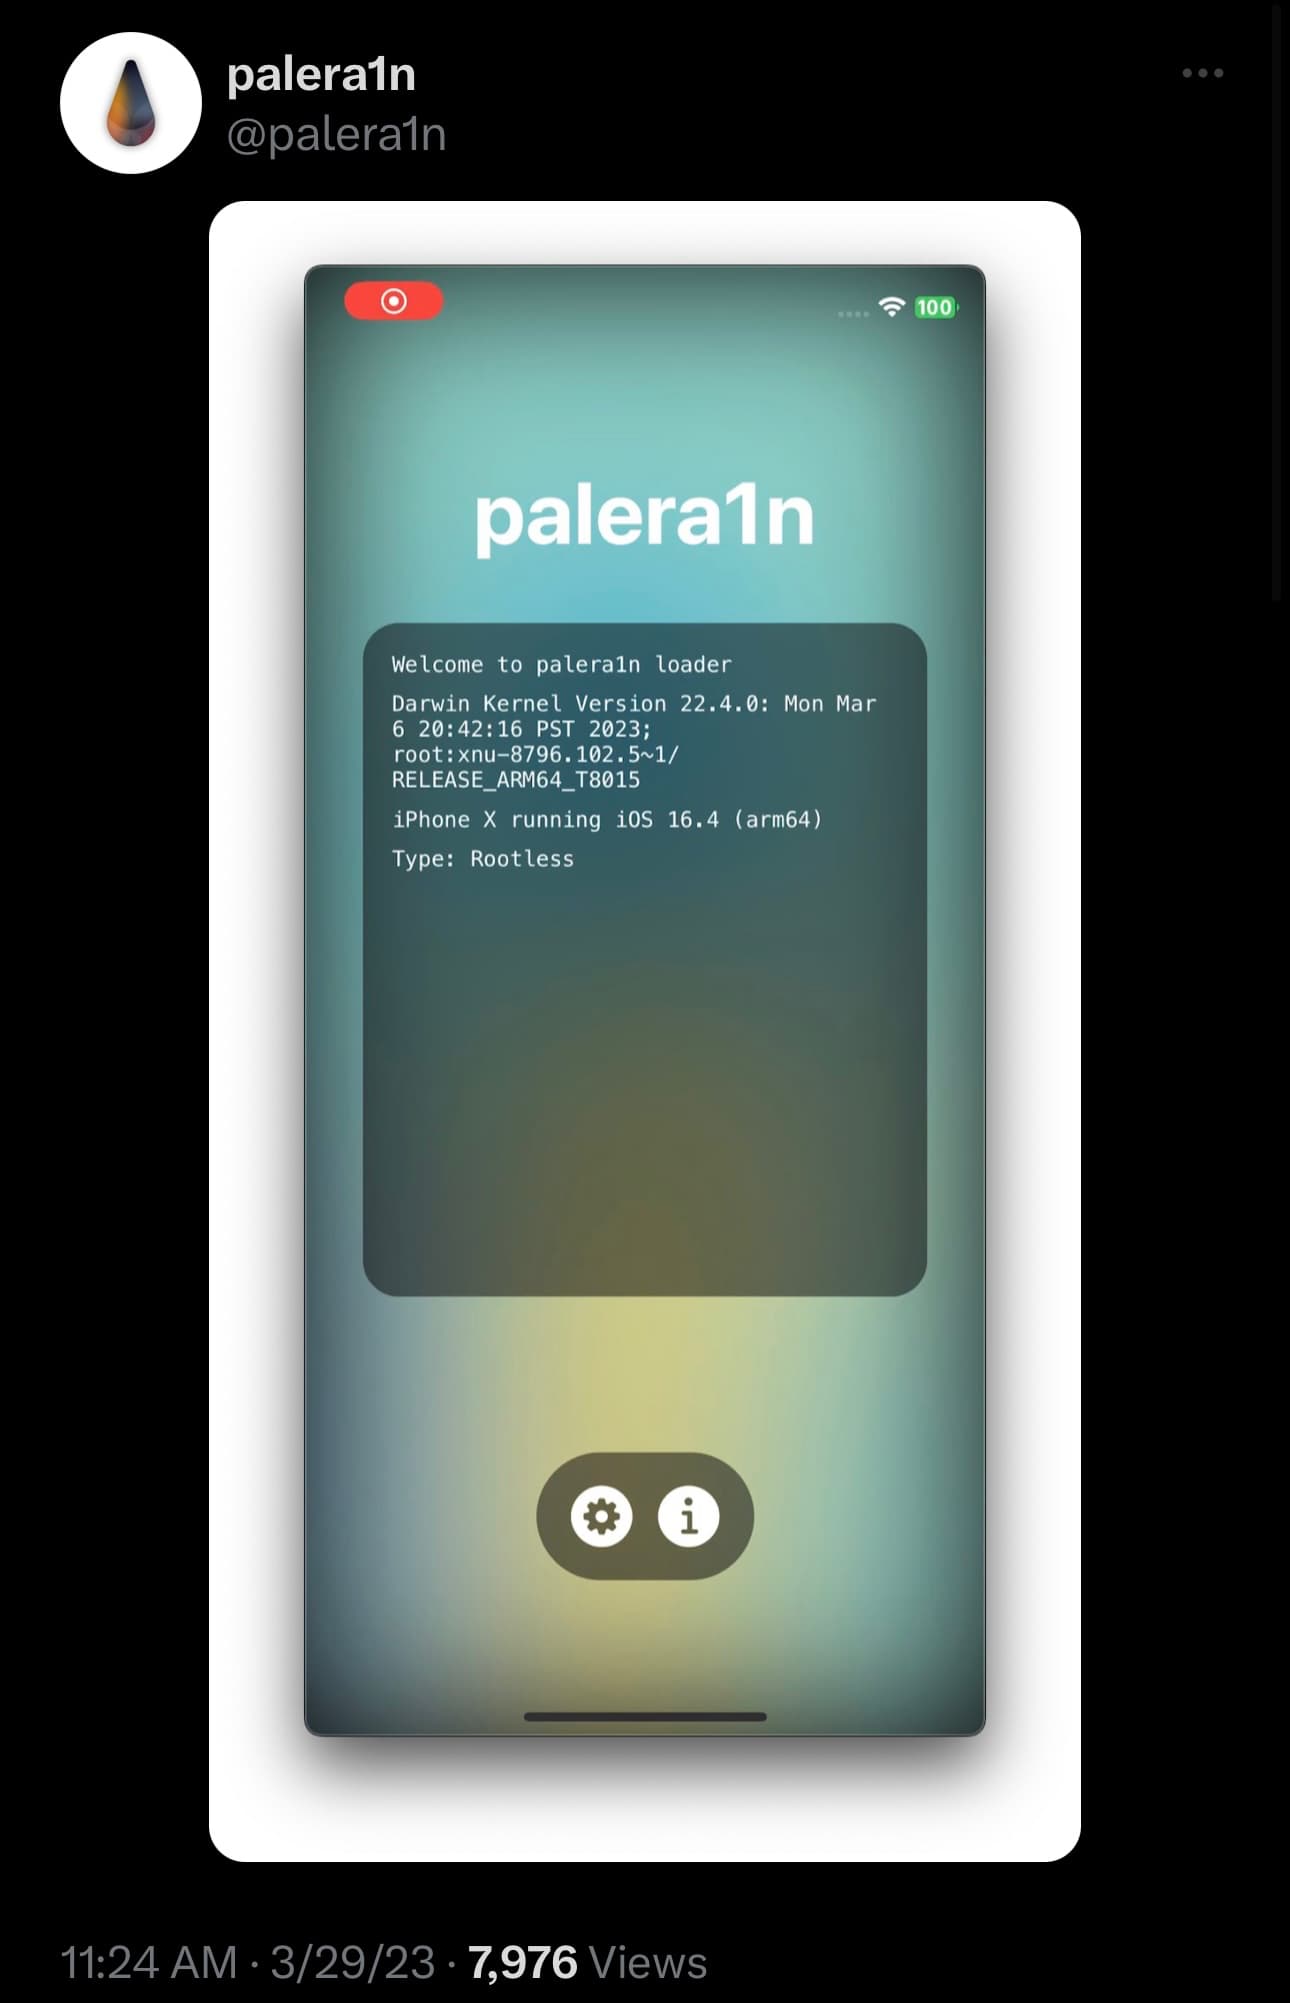 palera1n team teases iOS 16.4 support.